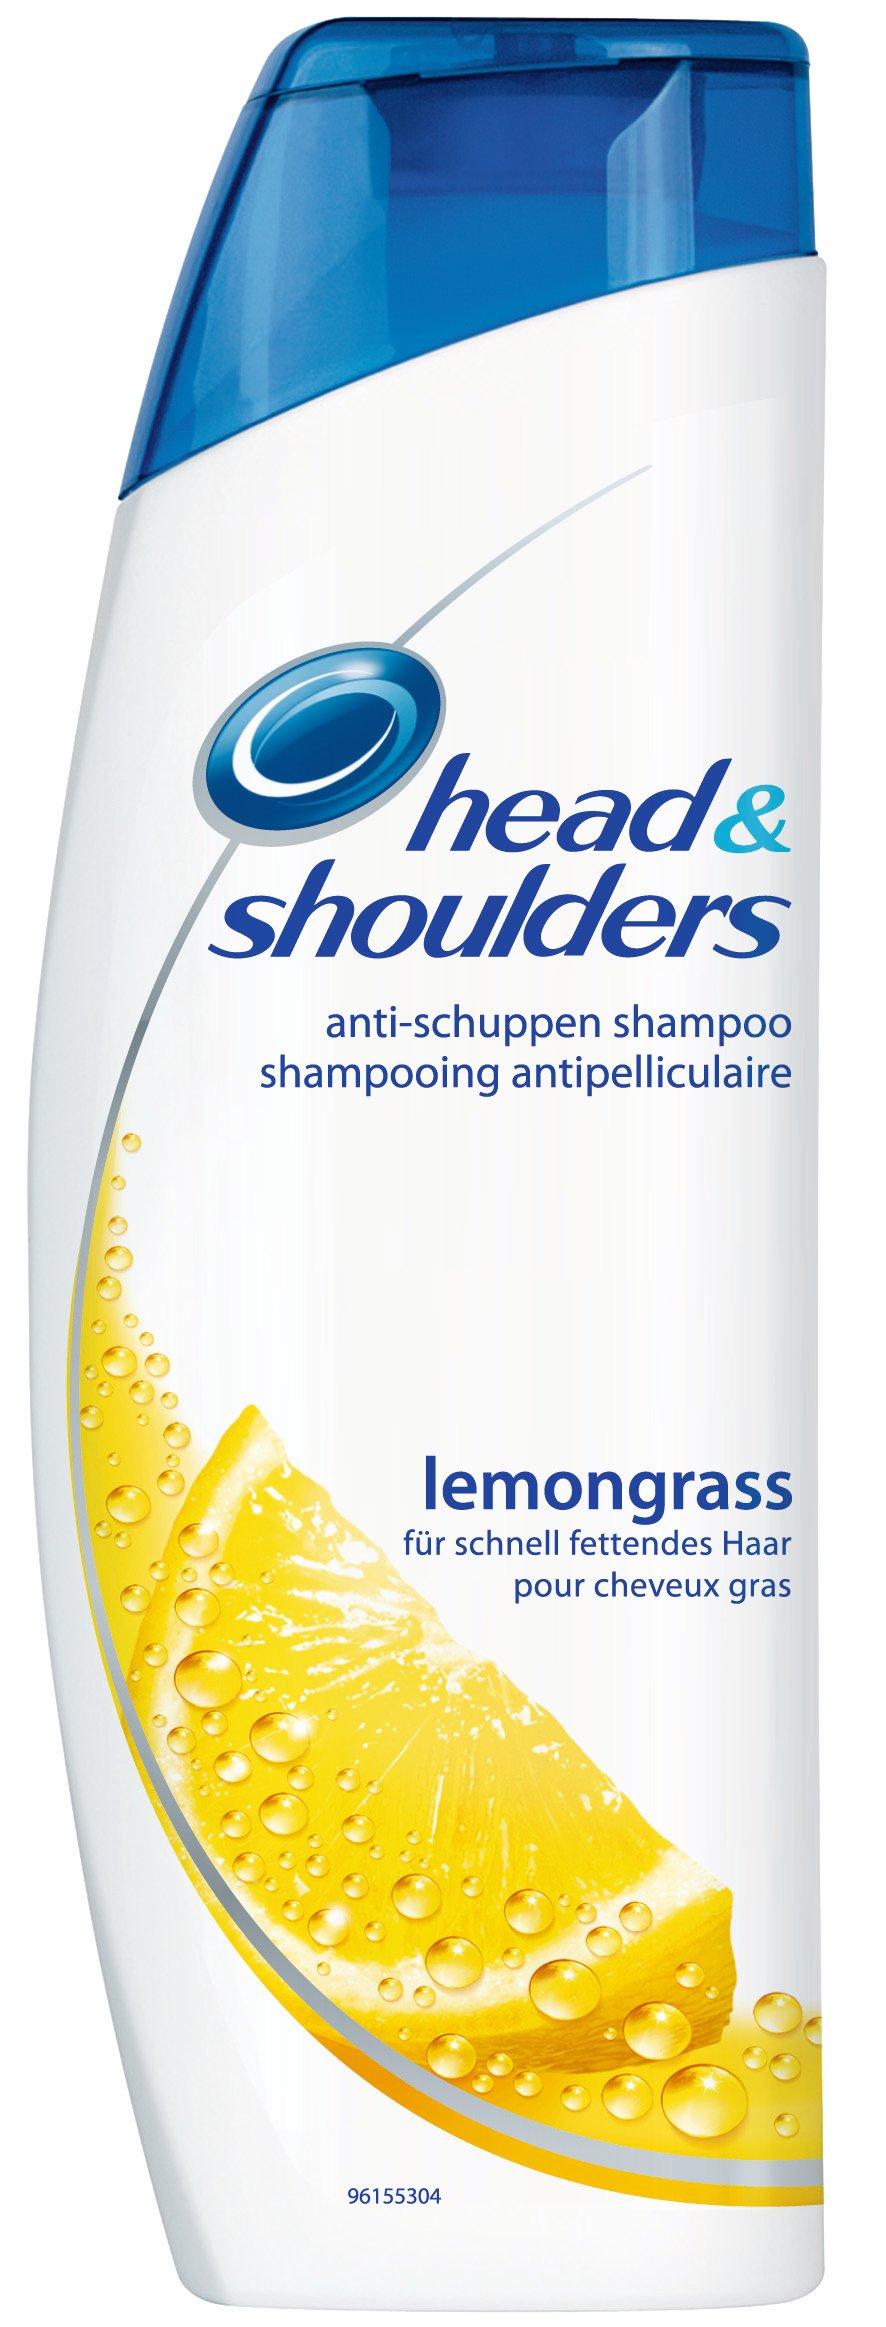 head & shoulders  Shampoo Lemongrass 